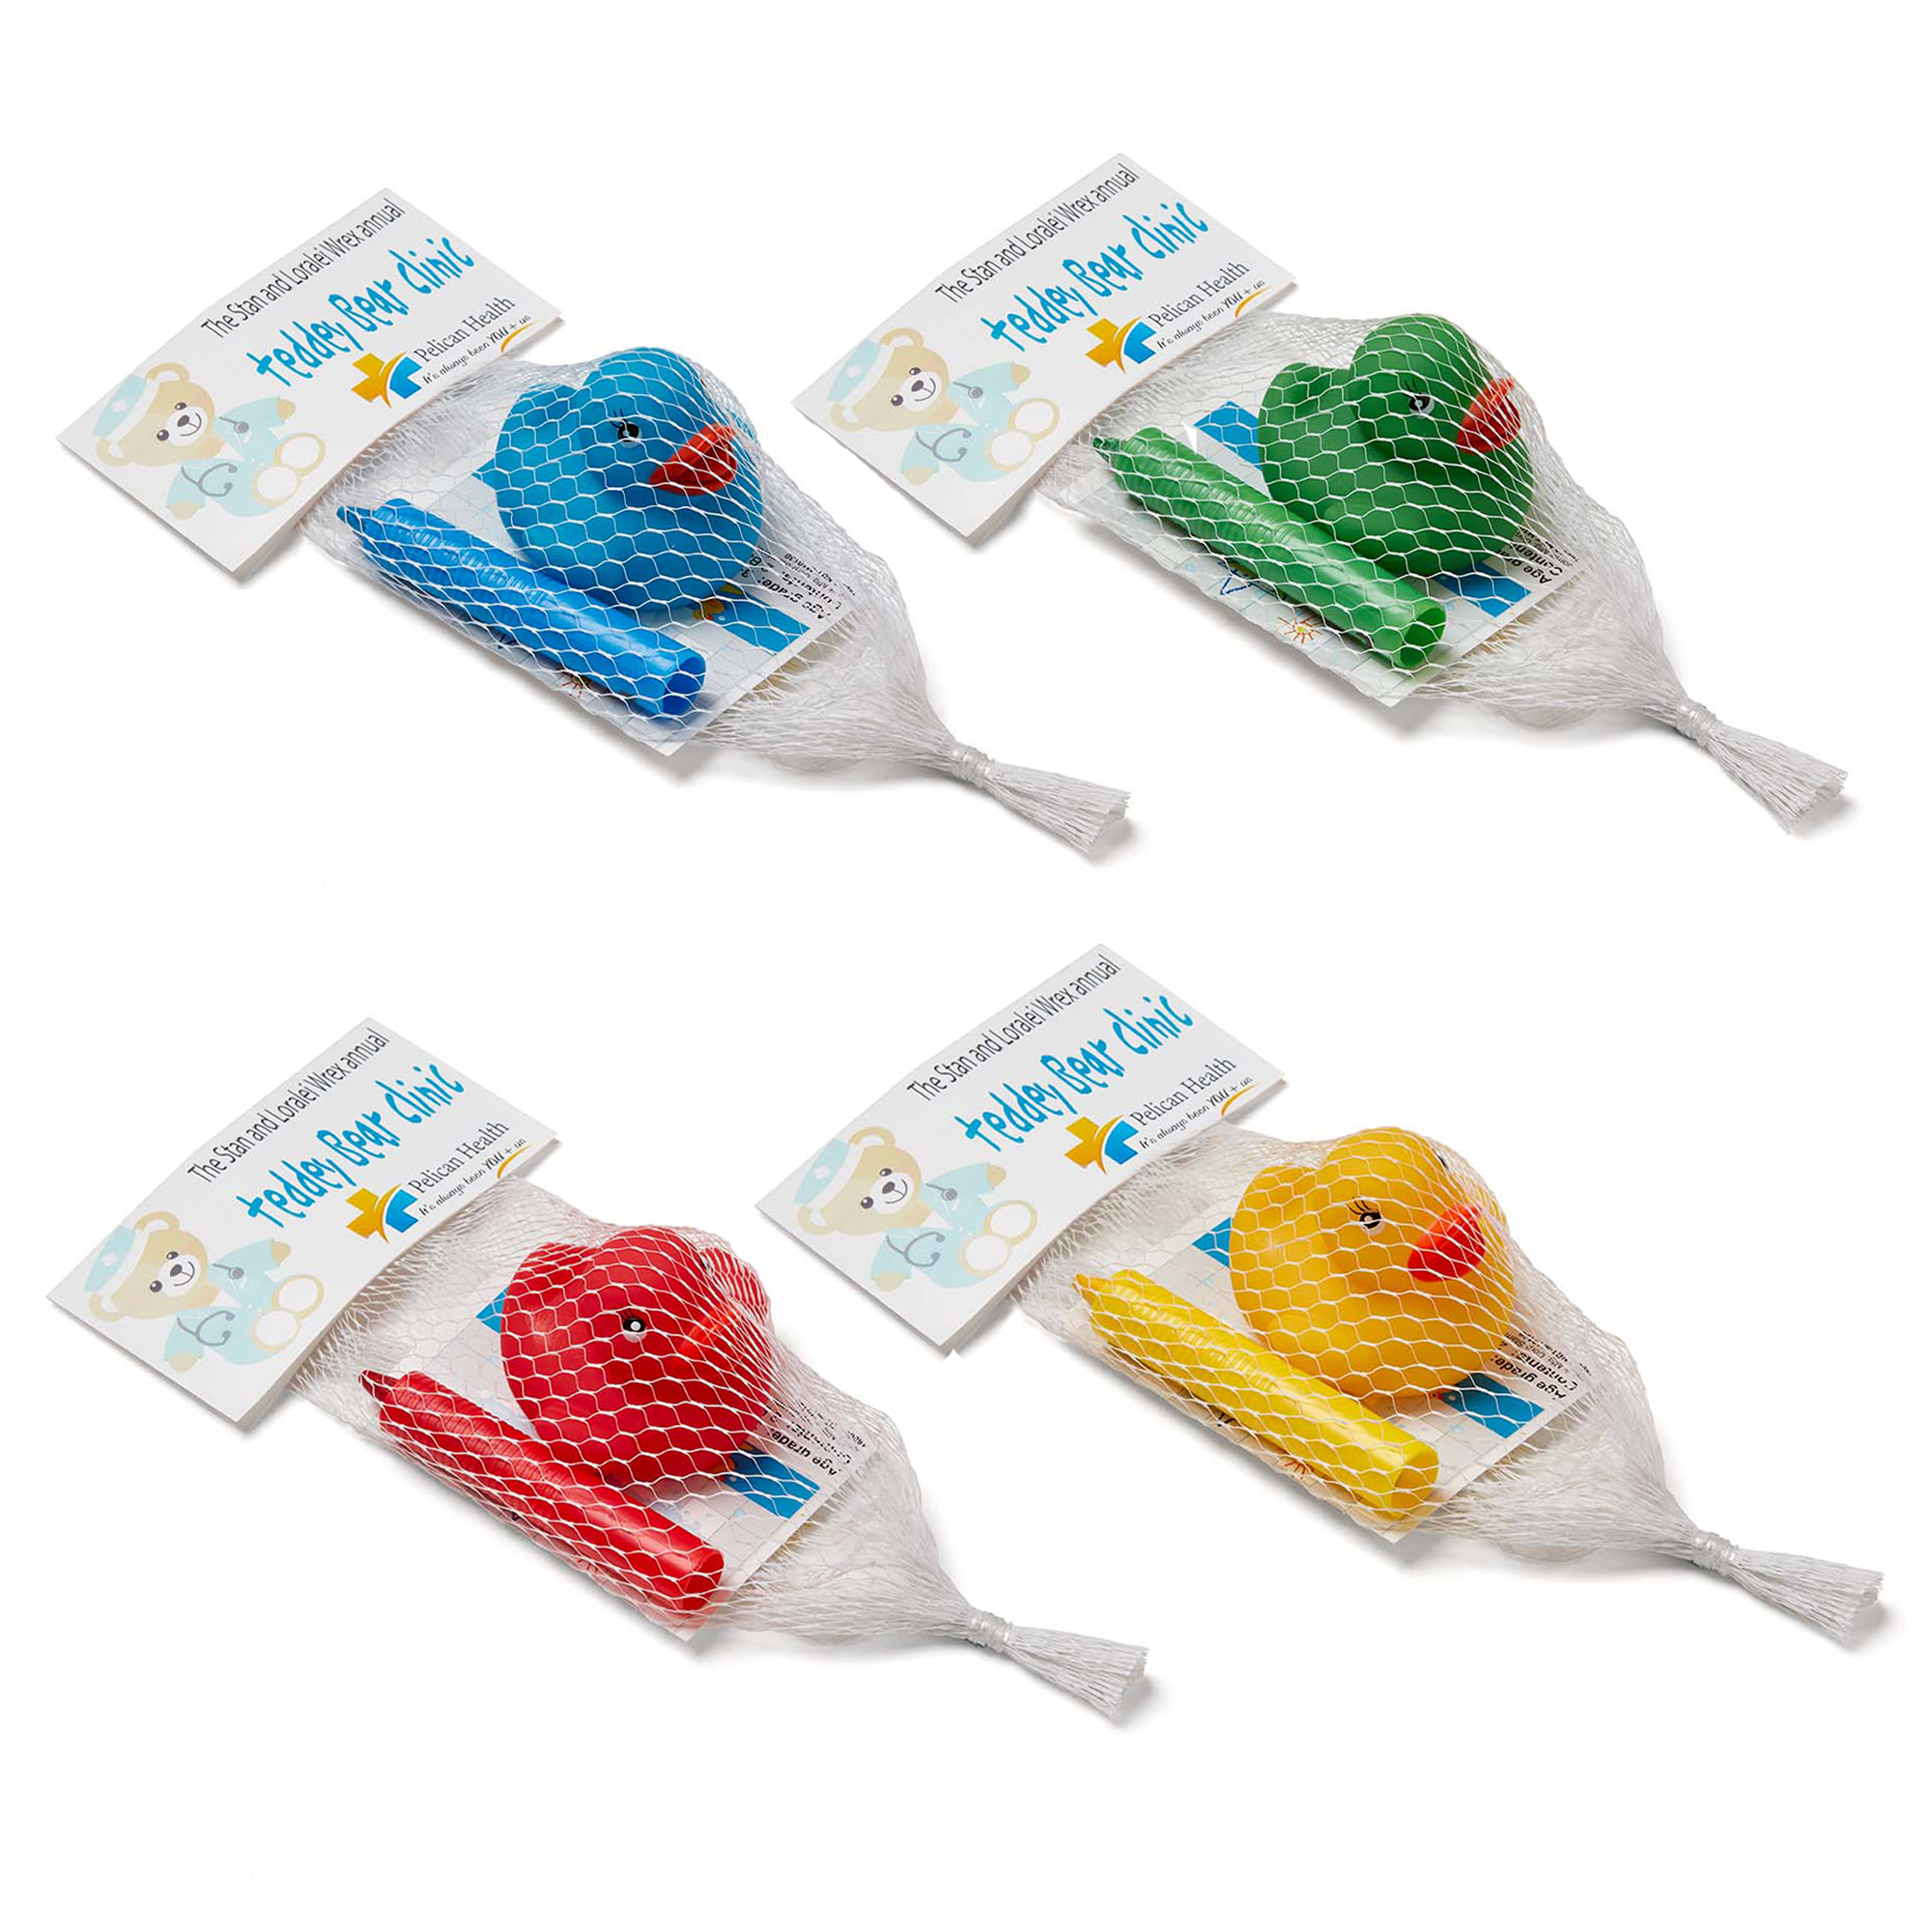 Bathtub Crayon and Rubber duck set